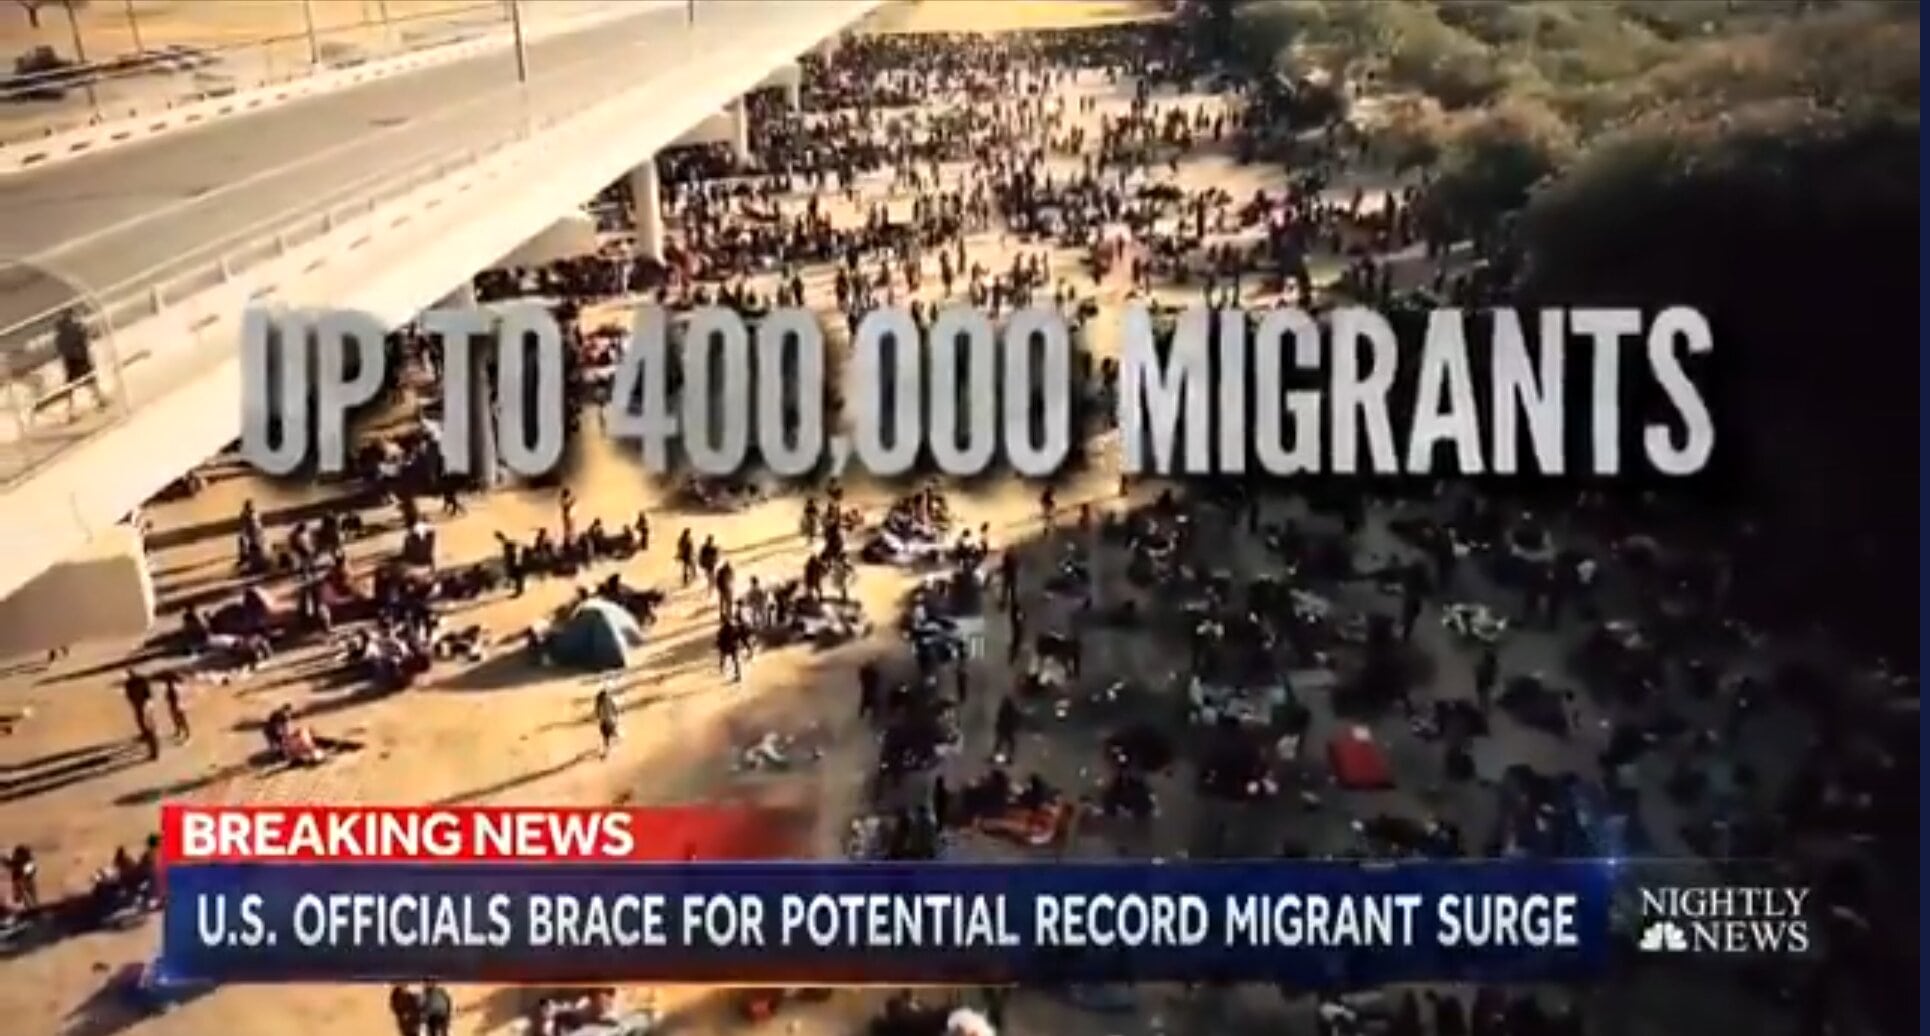 400K-Migrants-NBC-News-Screen-Image-09303021.jpg